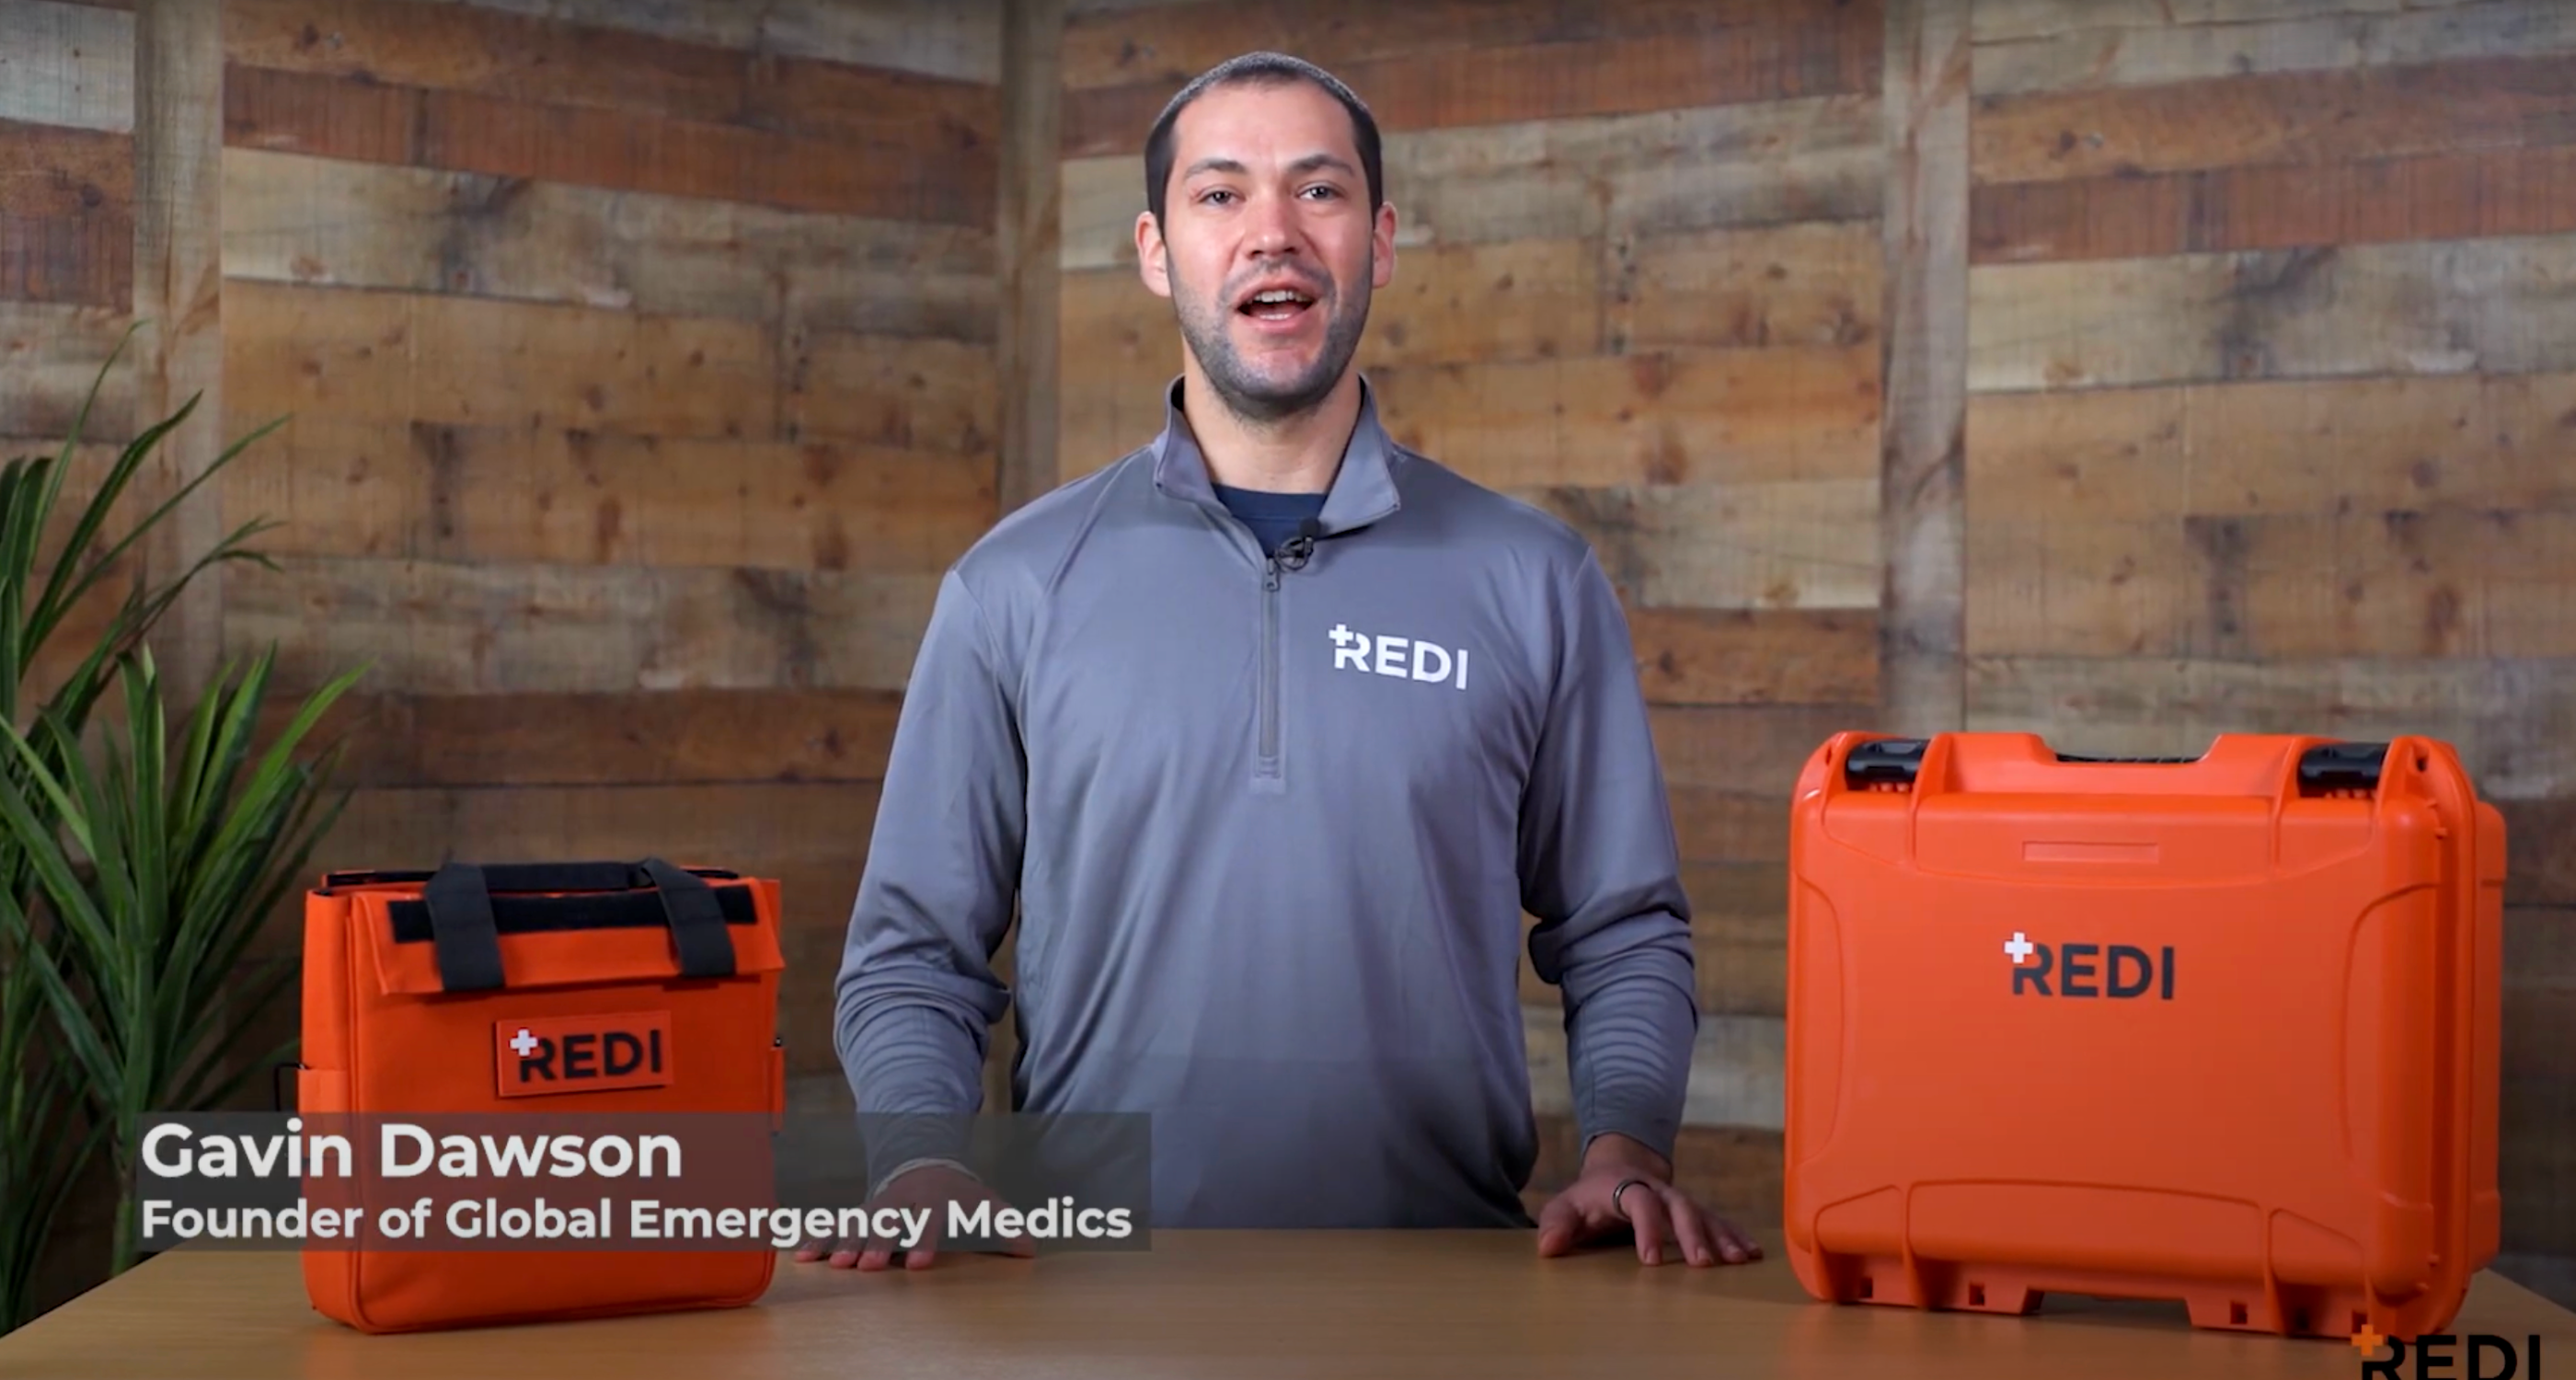 Meet your instructor video introducing Gavin Dawson, Founder of Global Emergency Medics